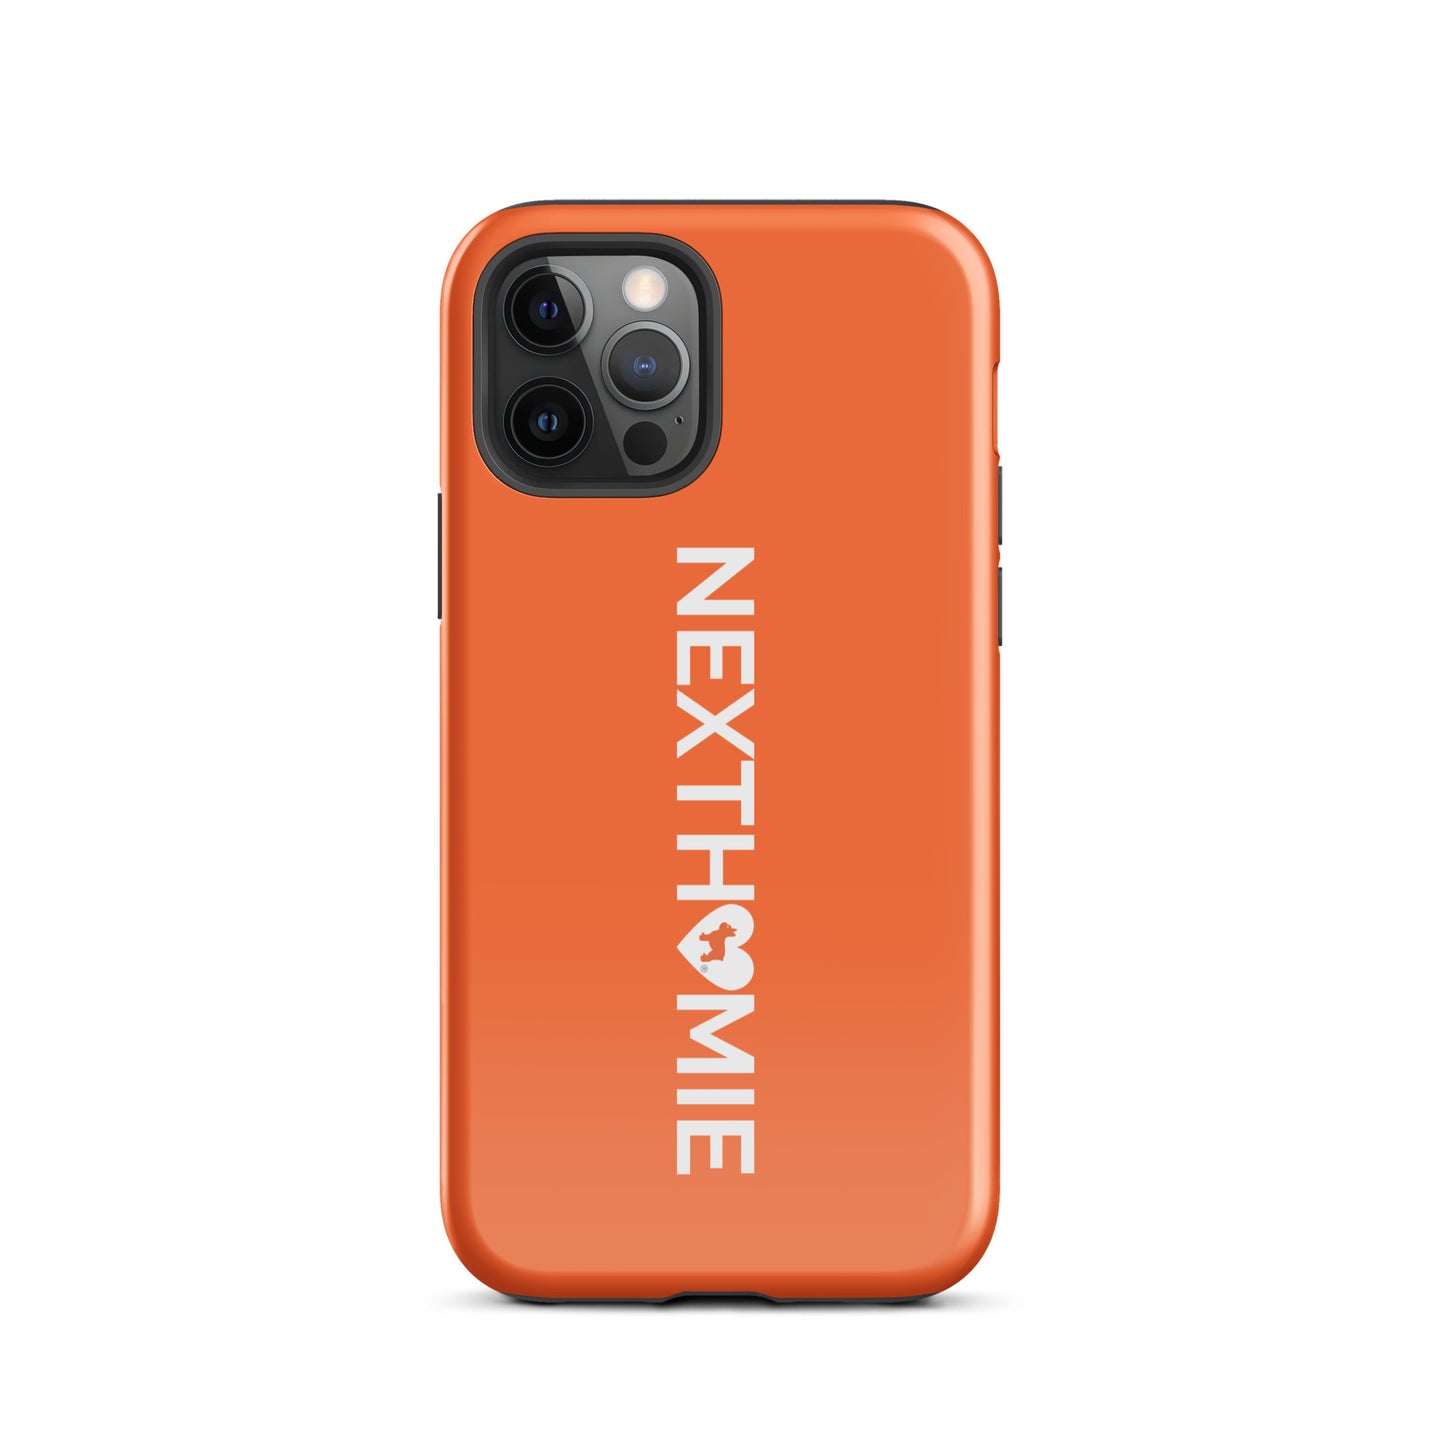 NextHomie Tough Case for iPhone®